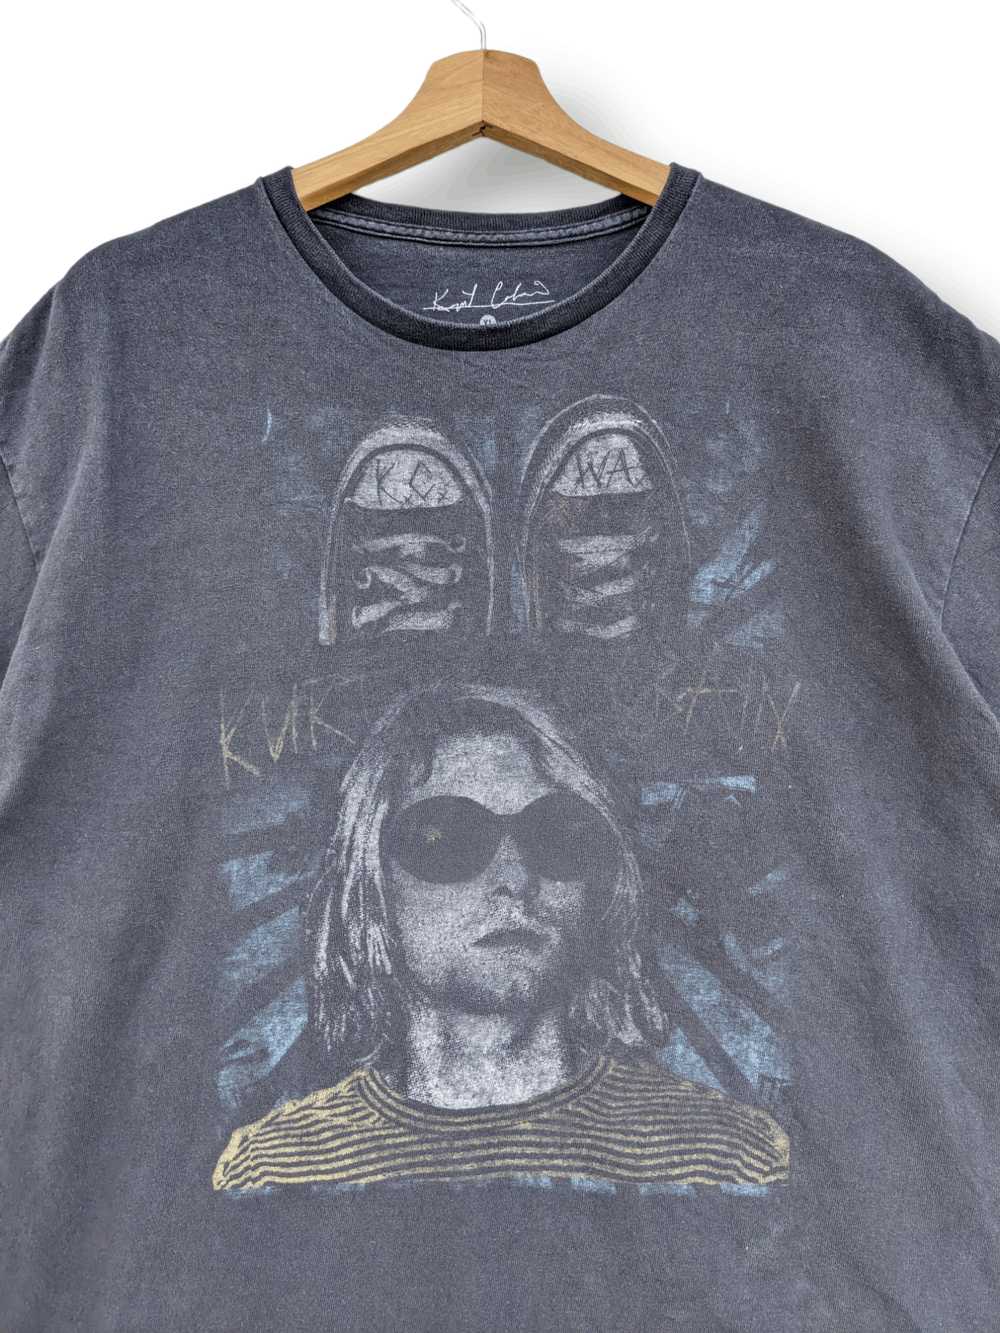 Band Tees × Kurt Cobain Kurt Cobain Converse Shoe… - image 2